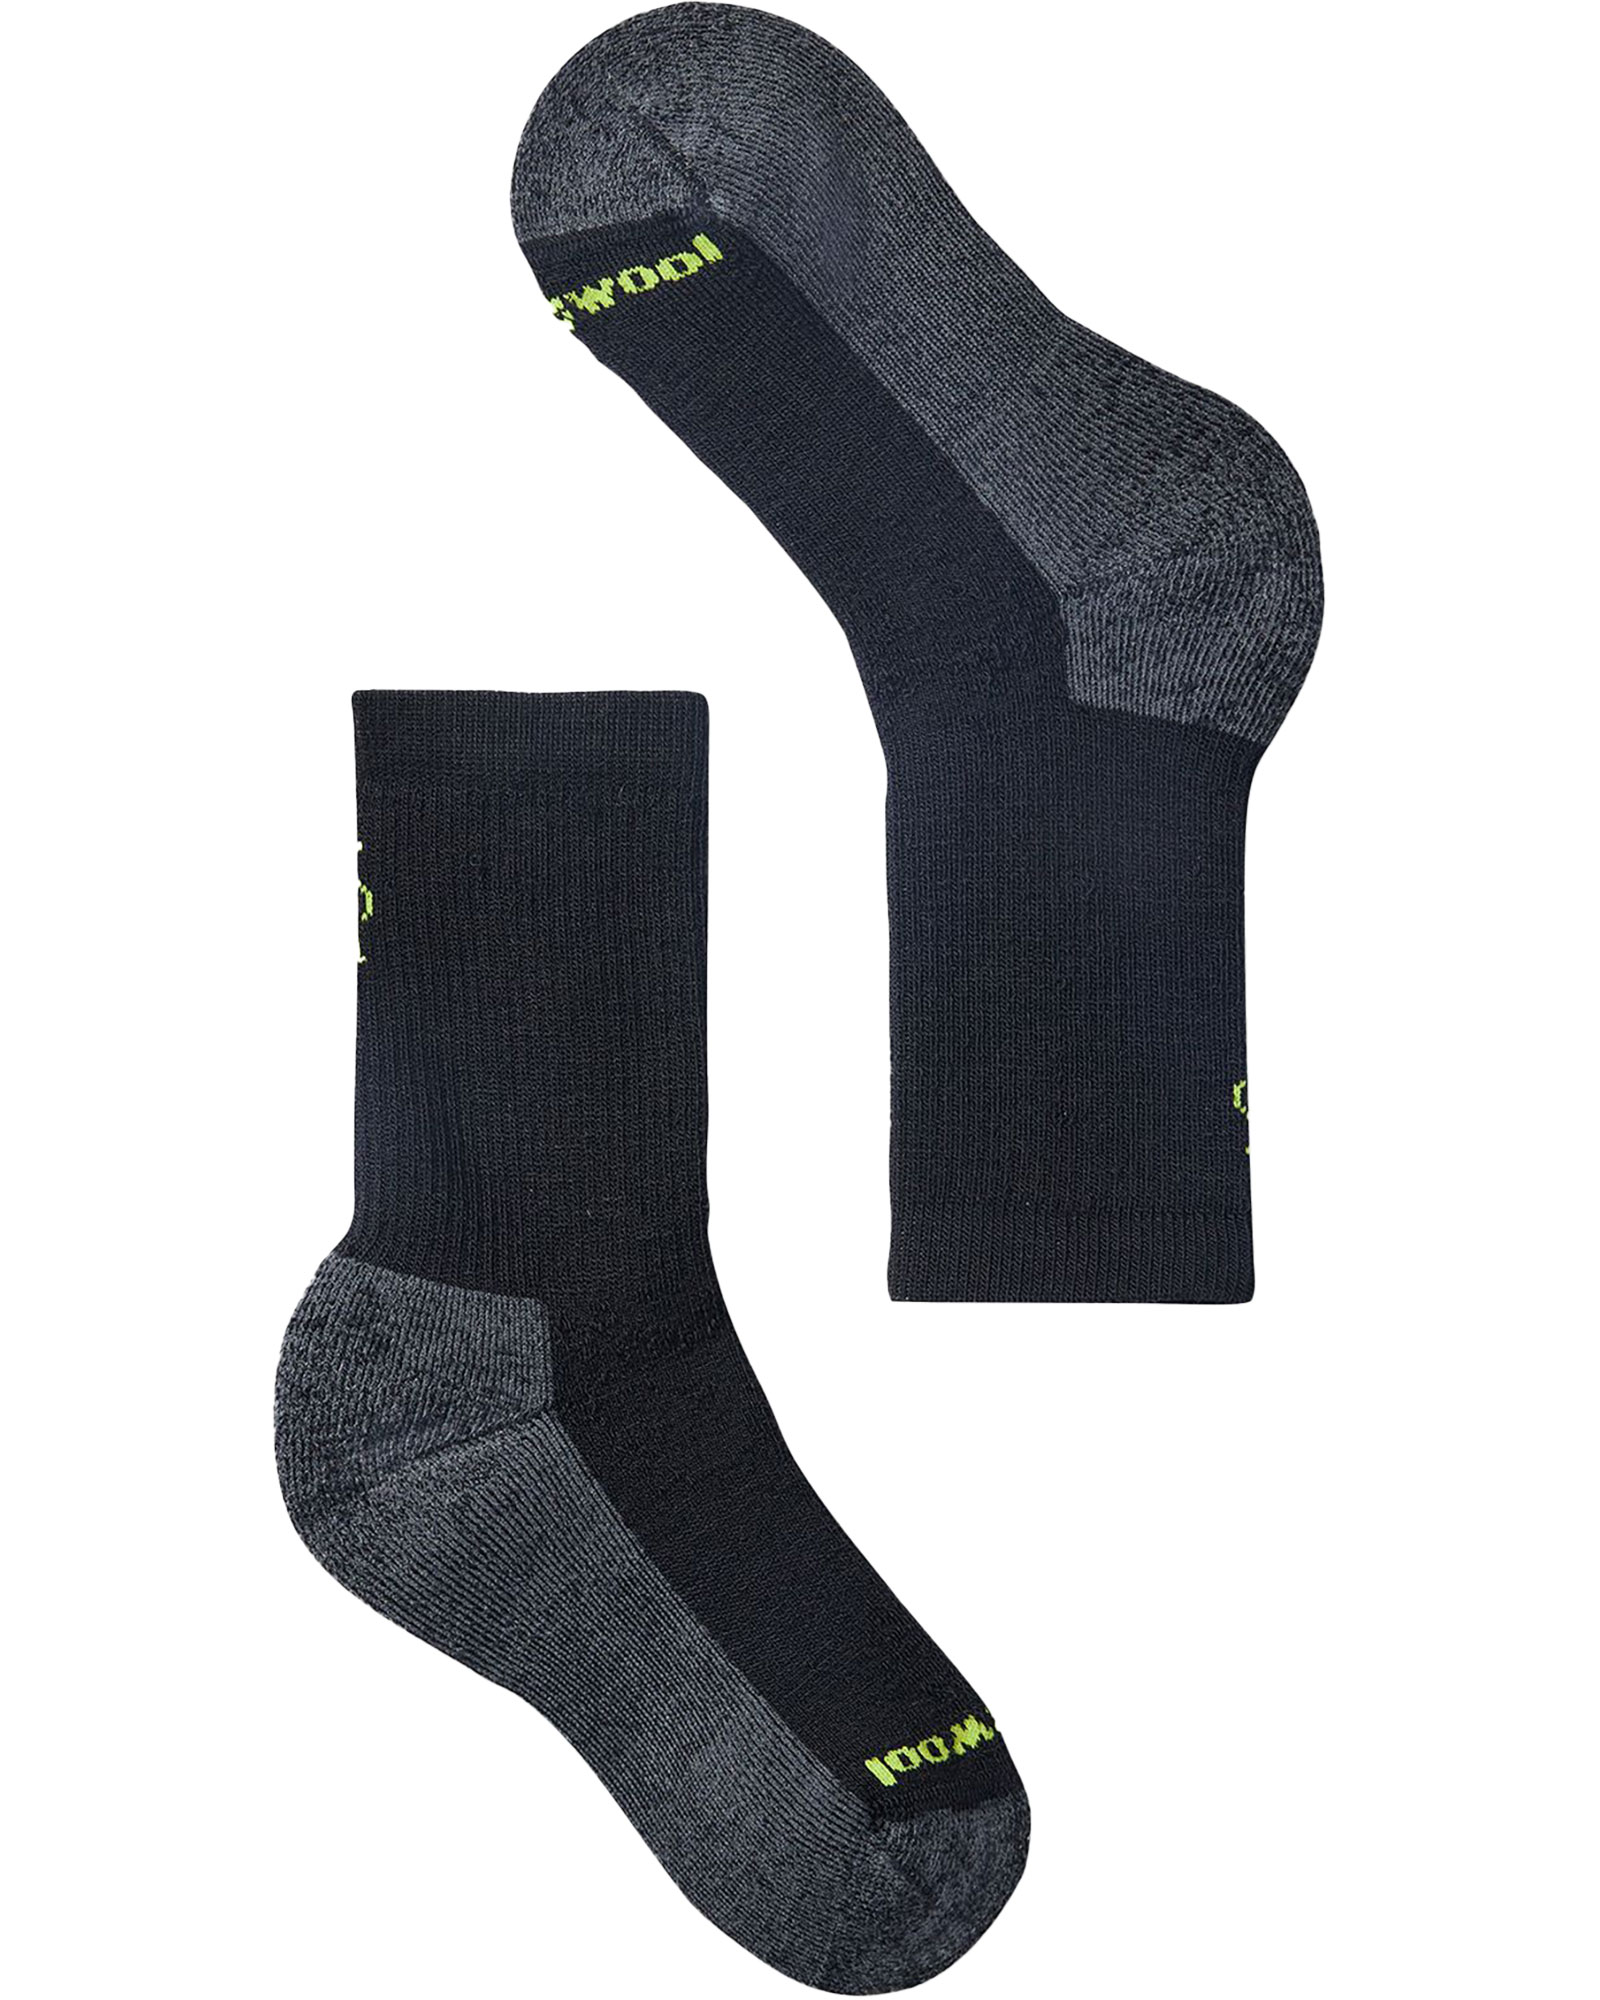 Smartwool Wintersport Full Cushion Kids’ Socks - Charcoal S